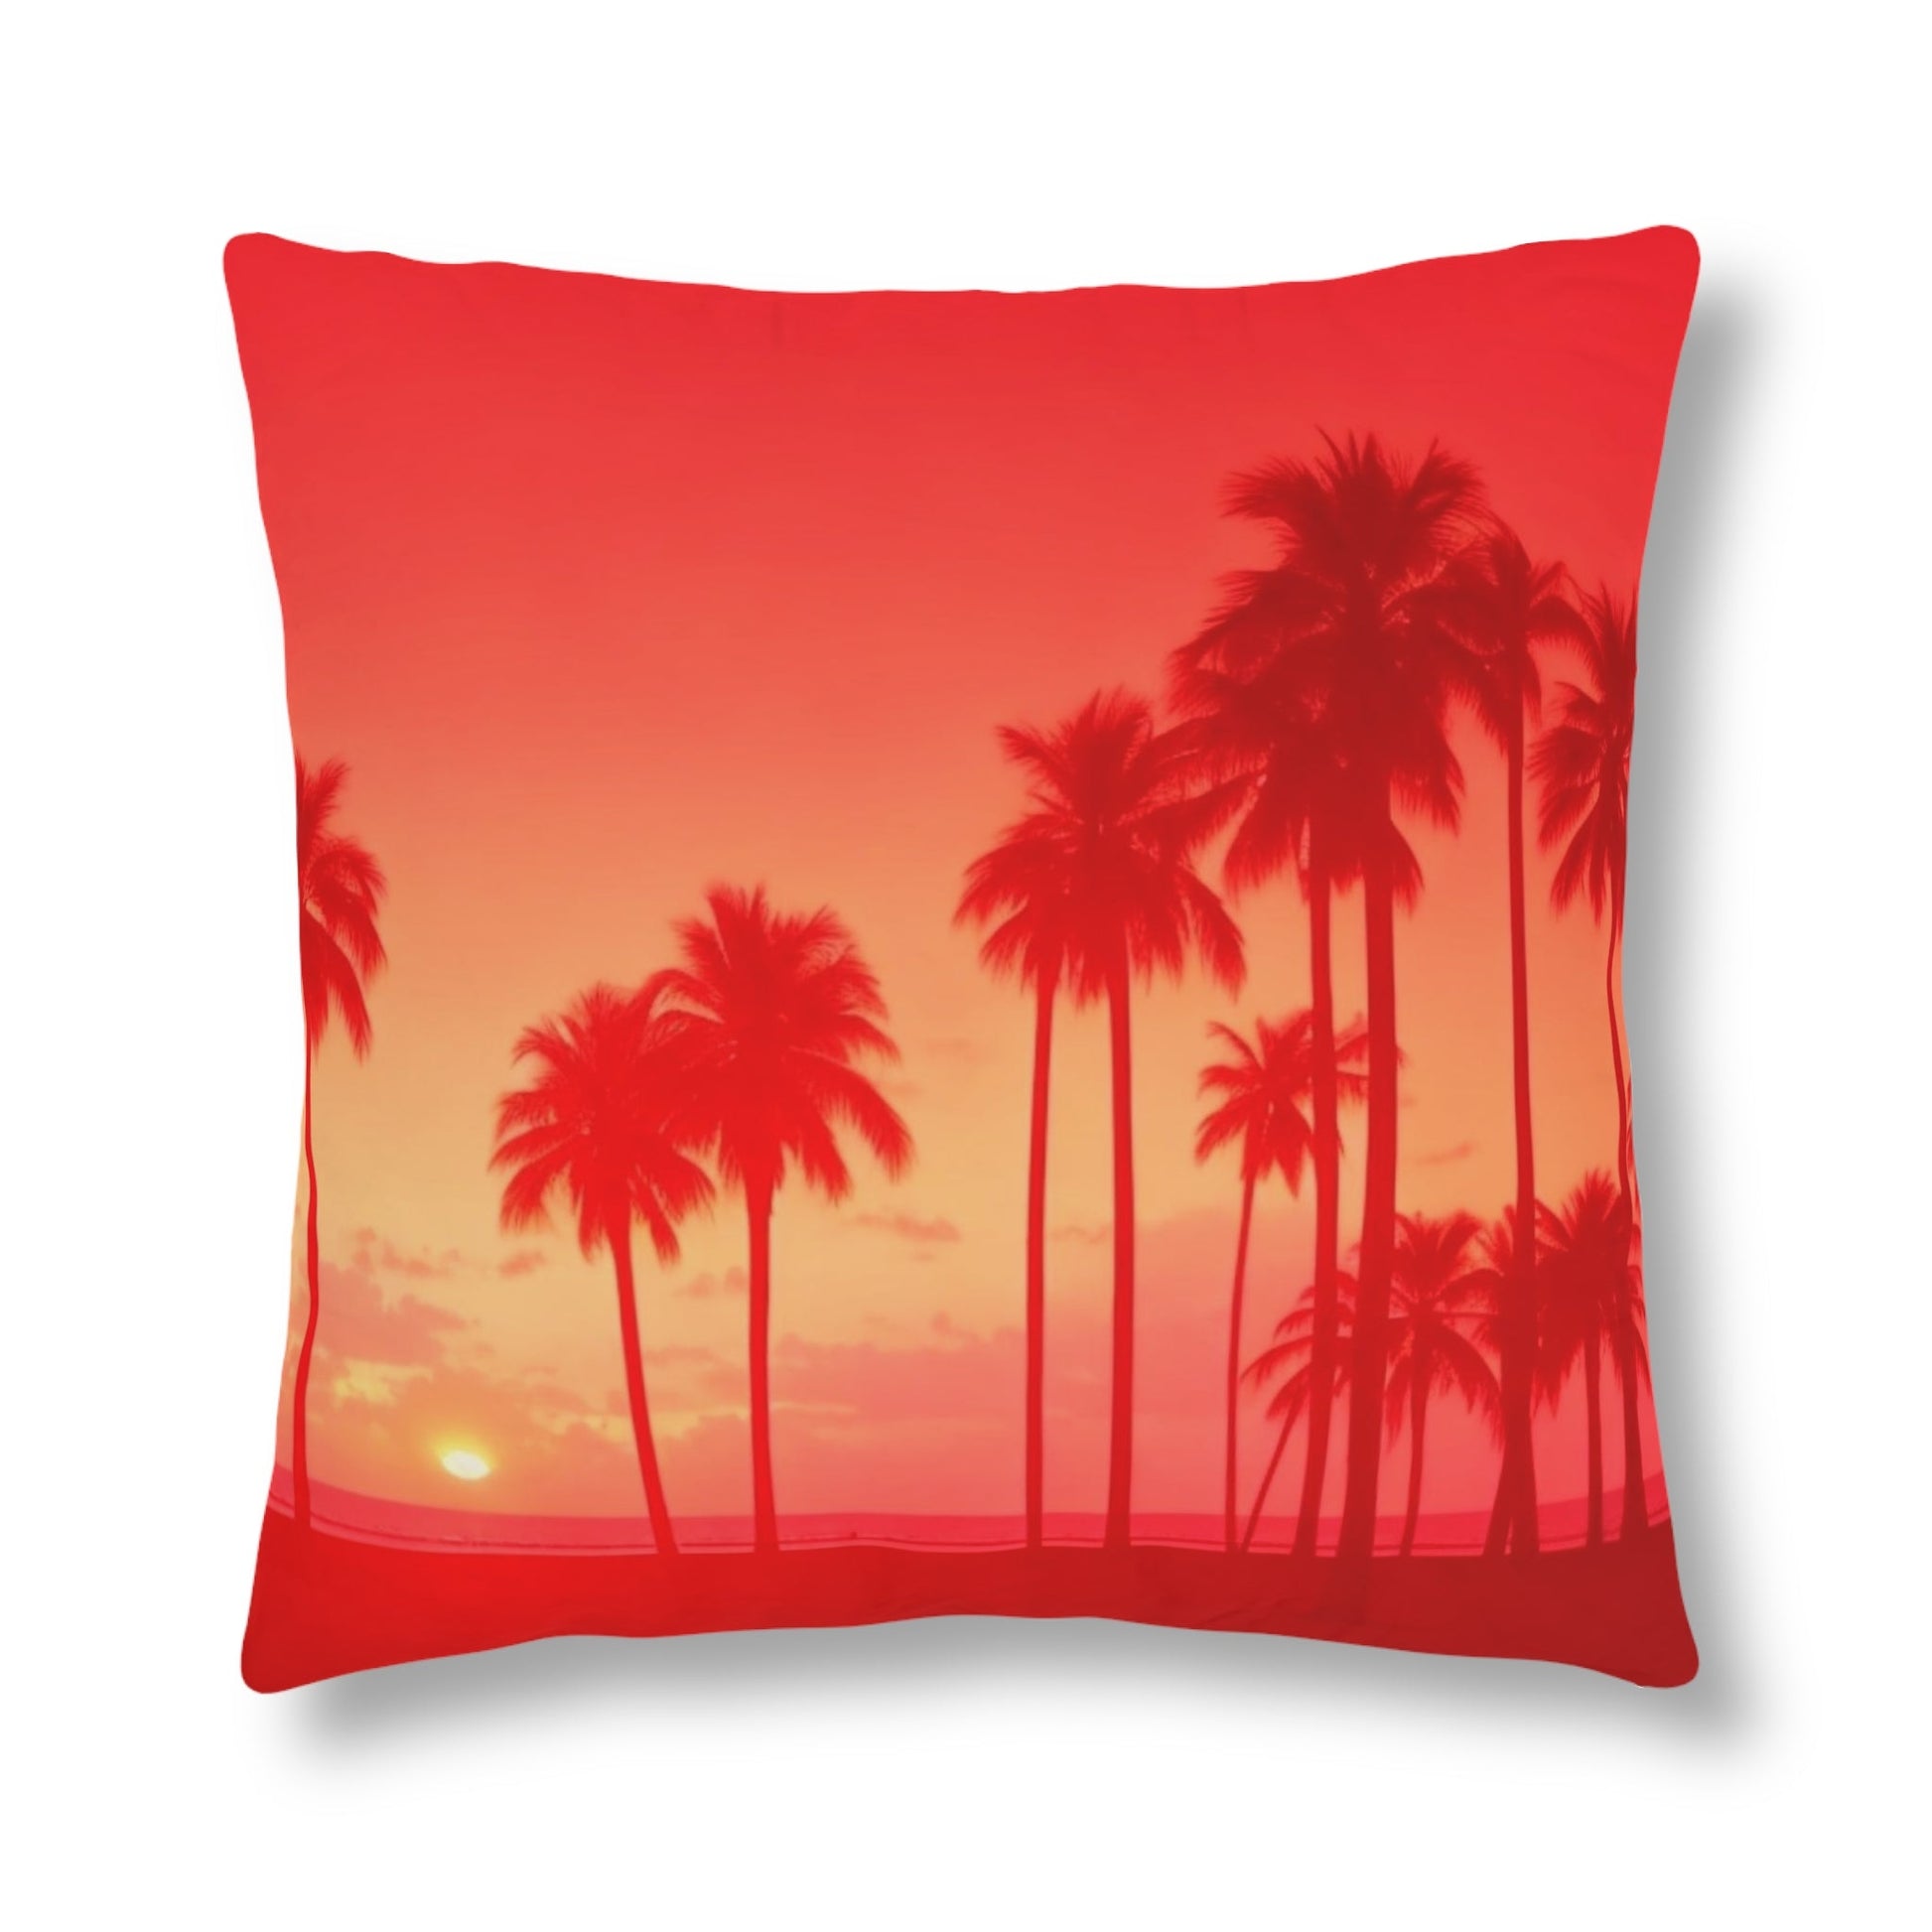 Home Decor - Red Sunset Waterproof Pillows